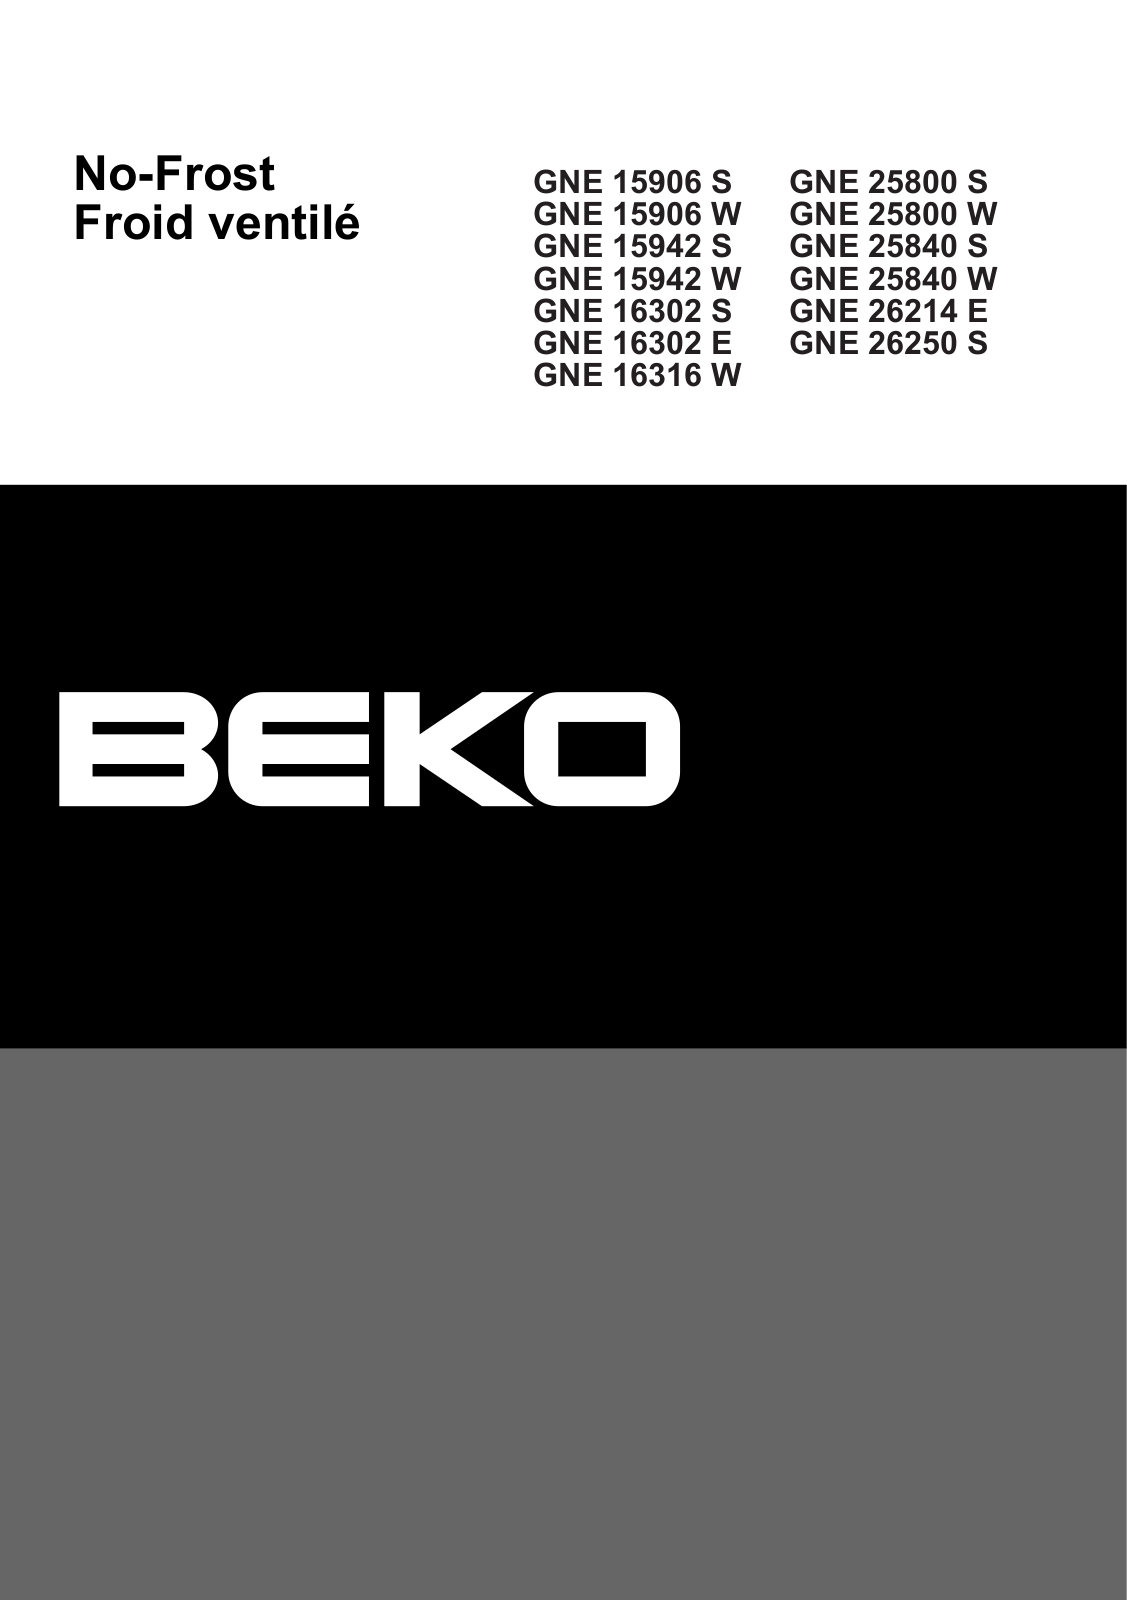 BEKO GNE 25800 S User Manual